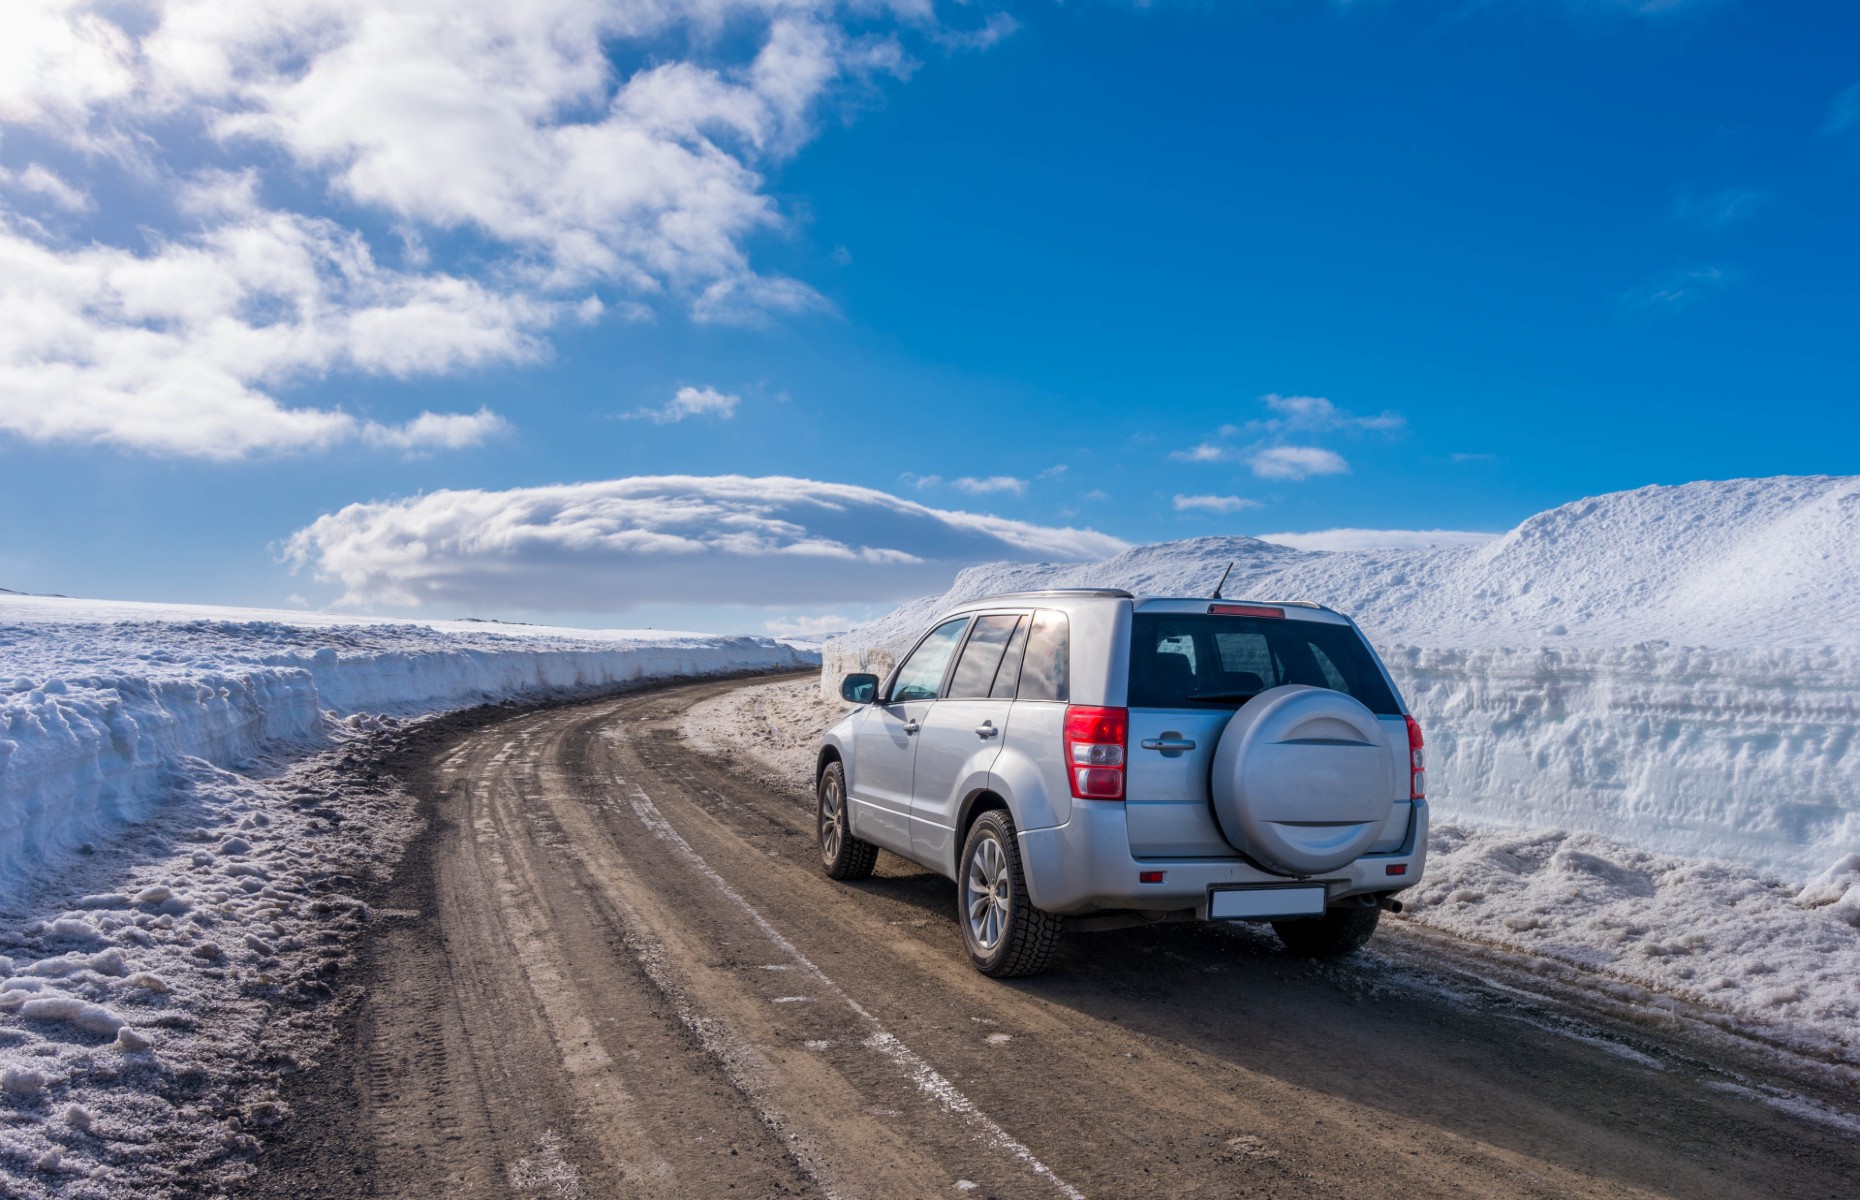 Driving through Iceland (Image: Vivi1/Shutterstock)